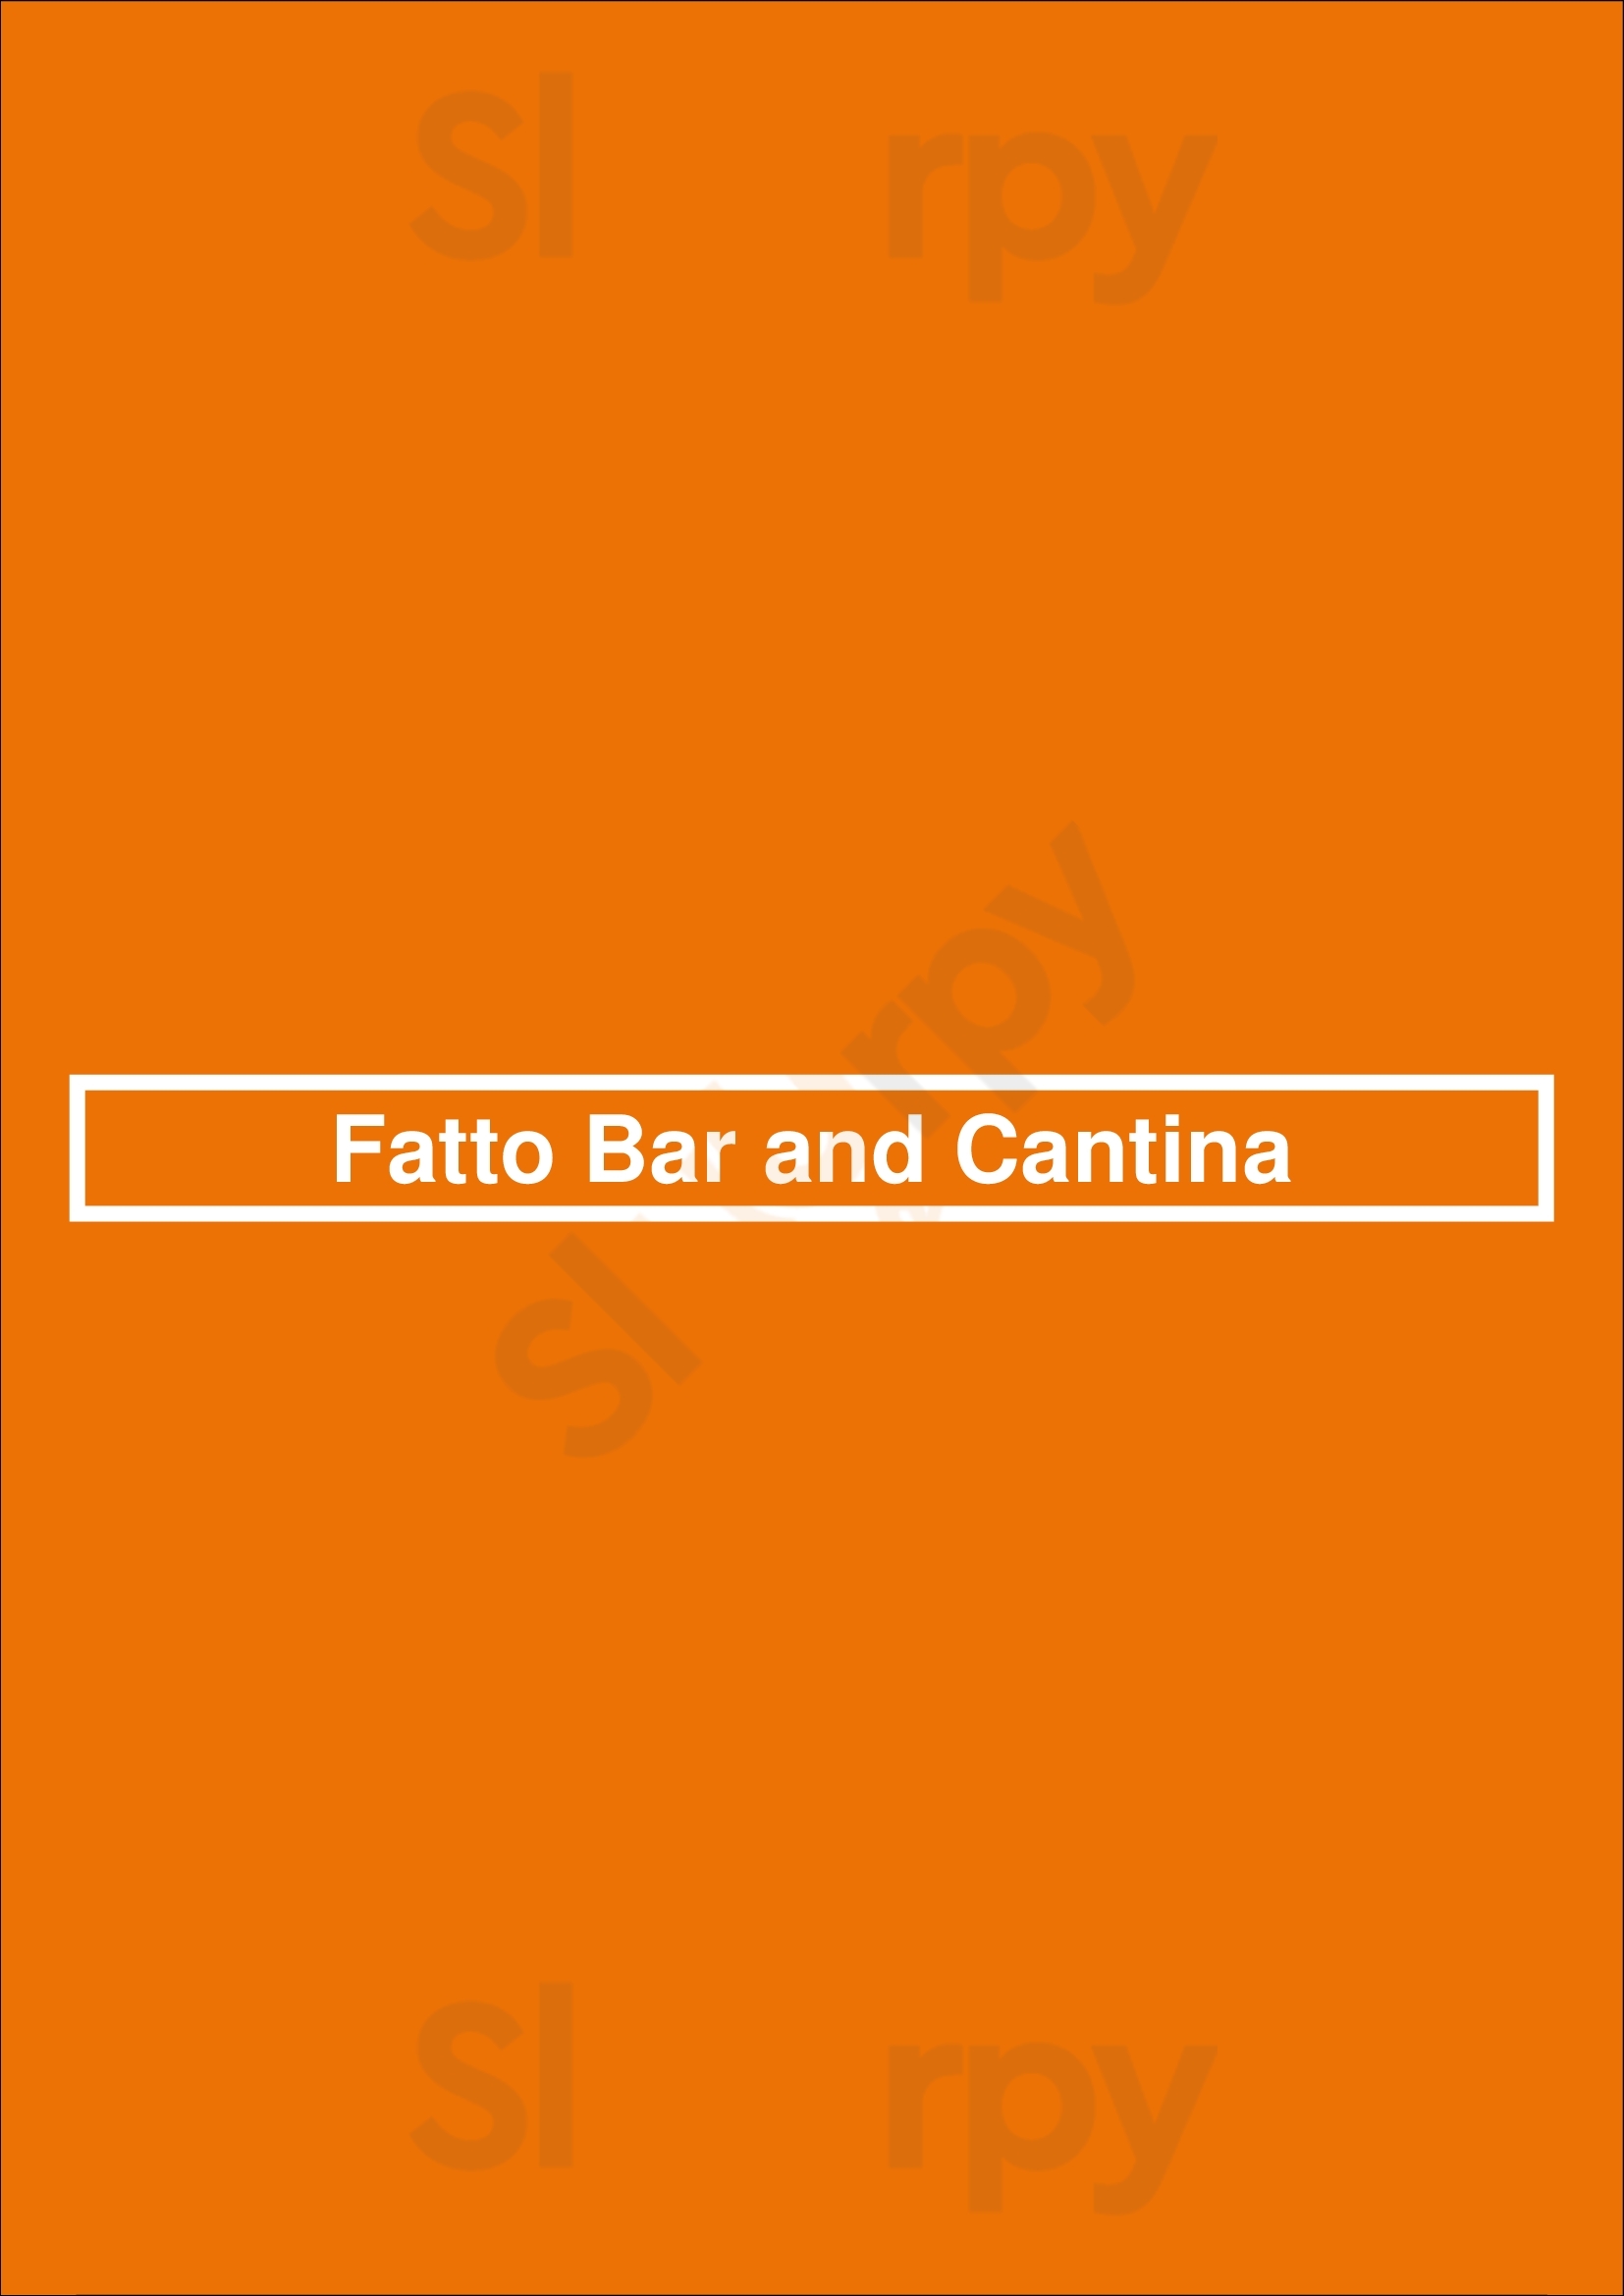 Fatto Bar And Cantina Melbourne Menu - 1